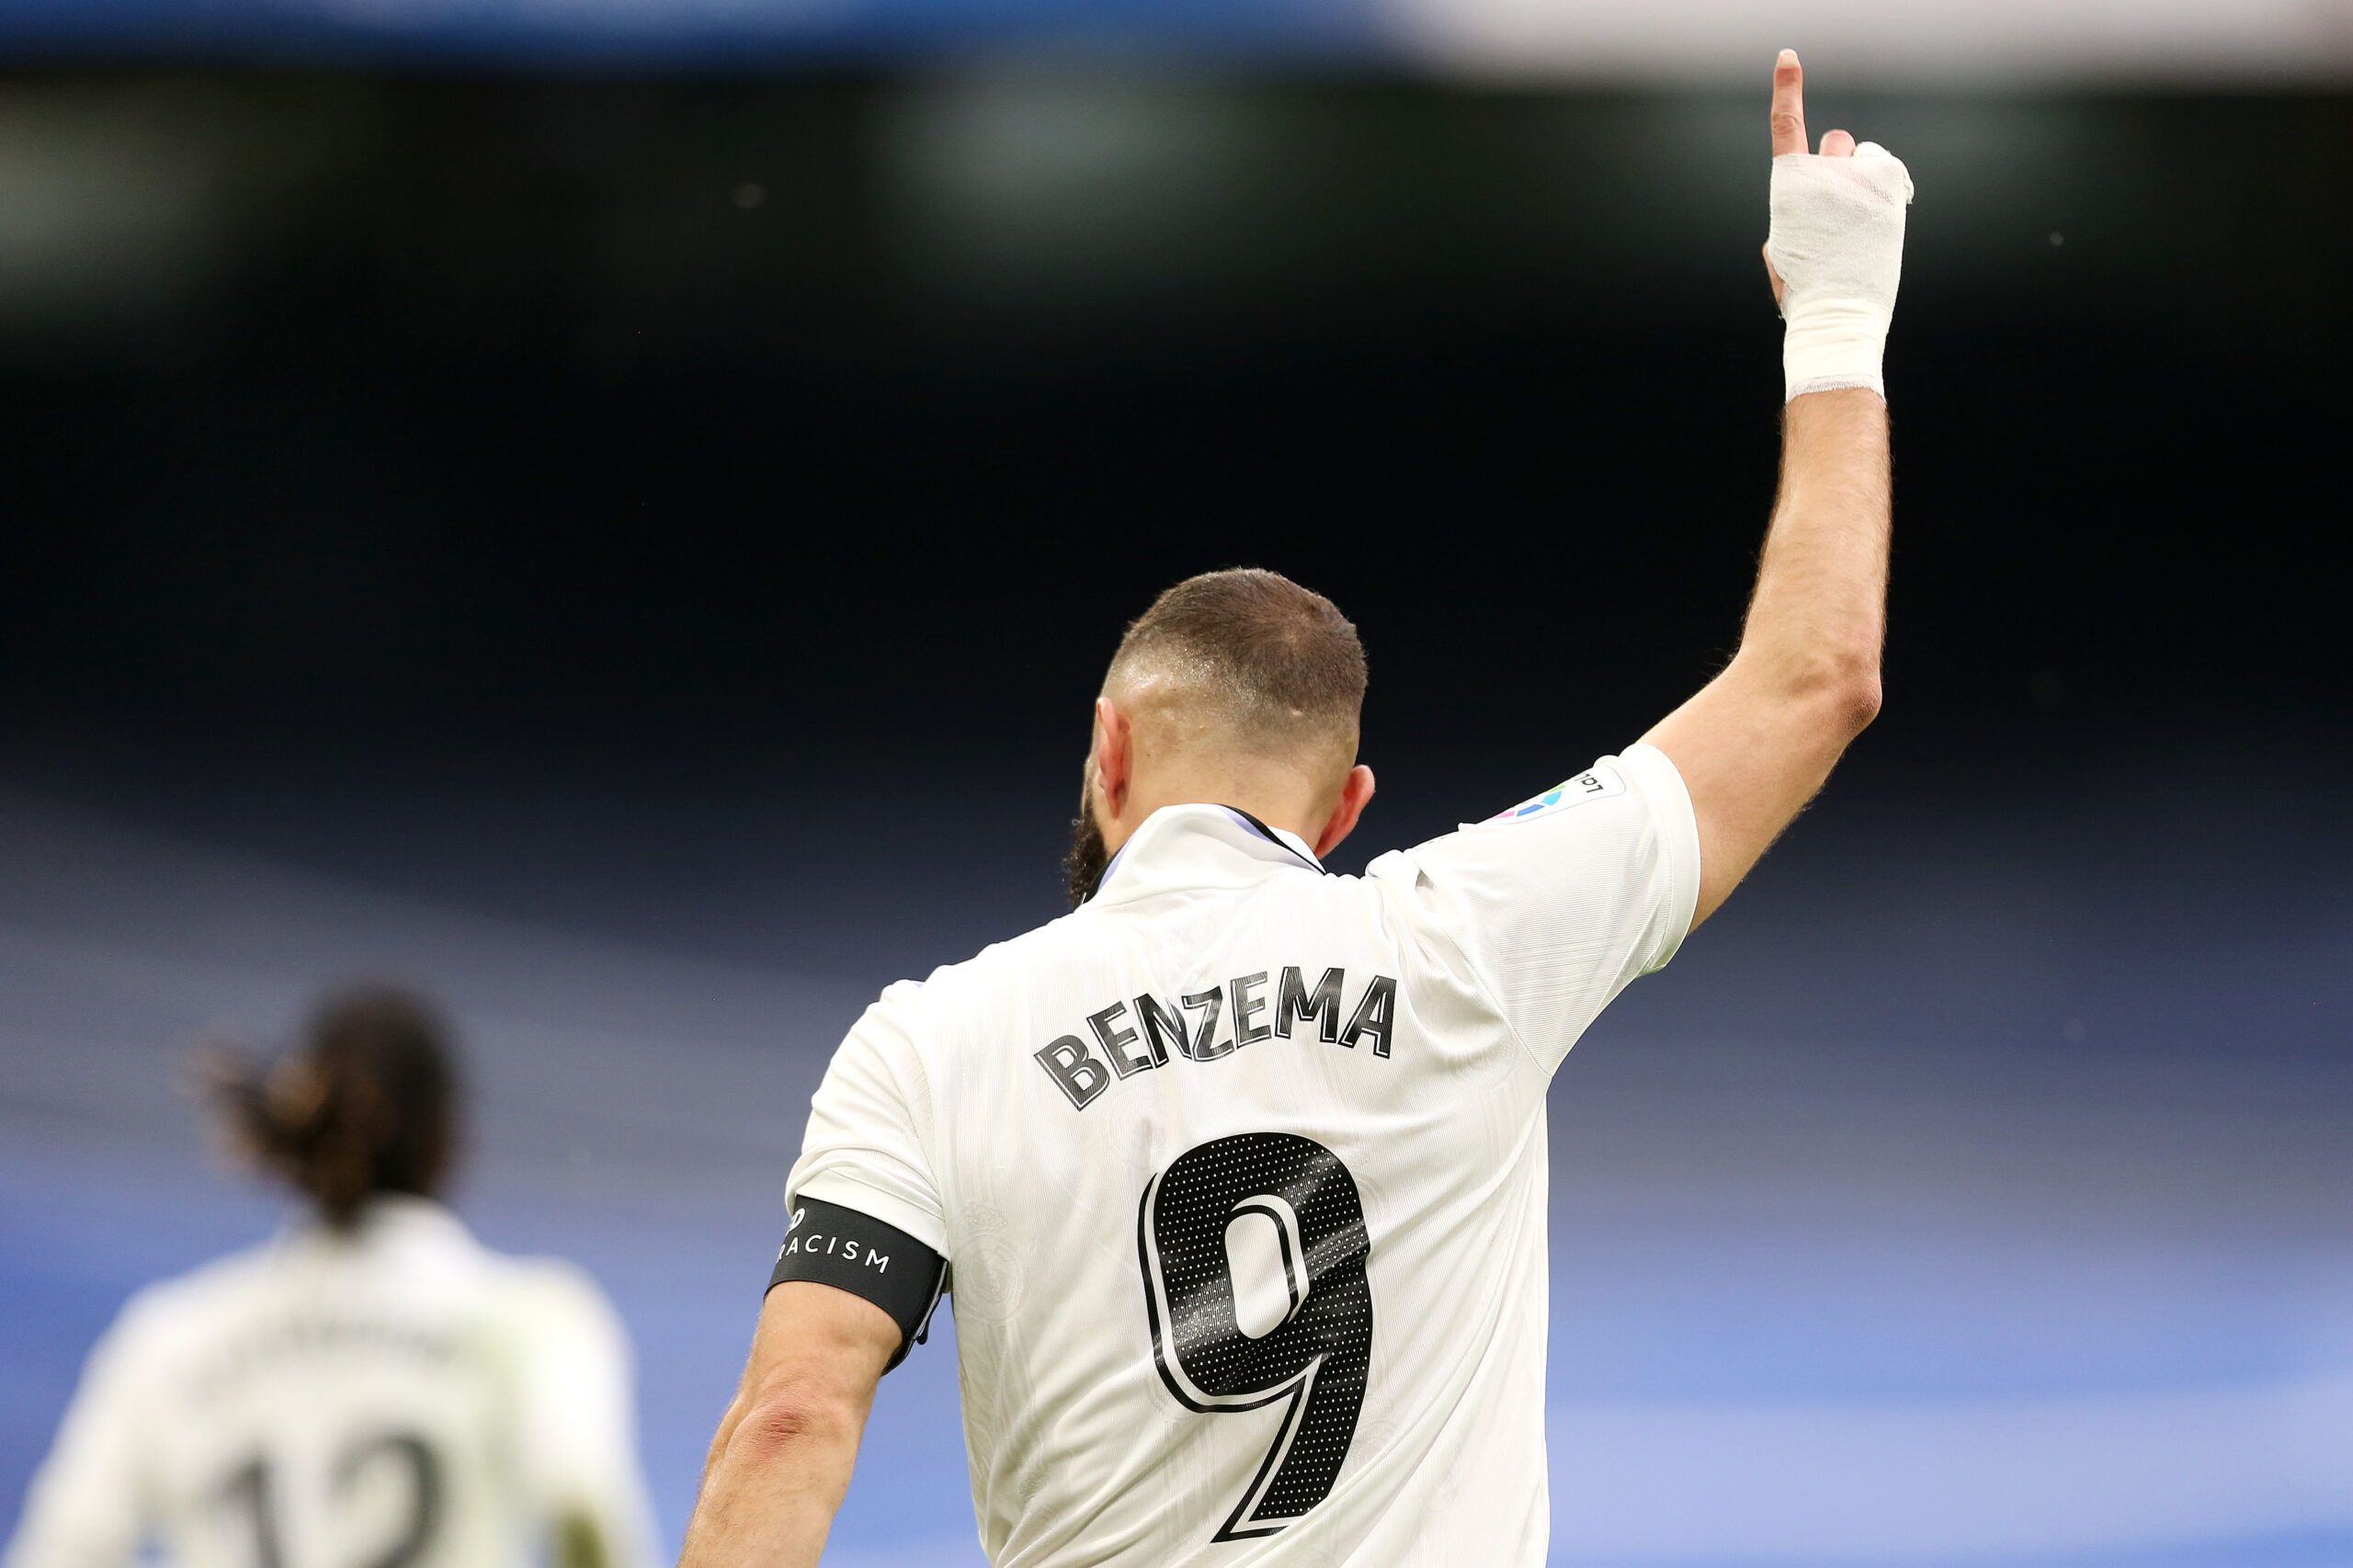 OFICIAL: Benzema abandona el Real Madrid